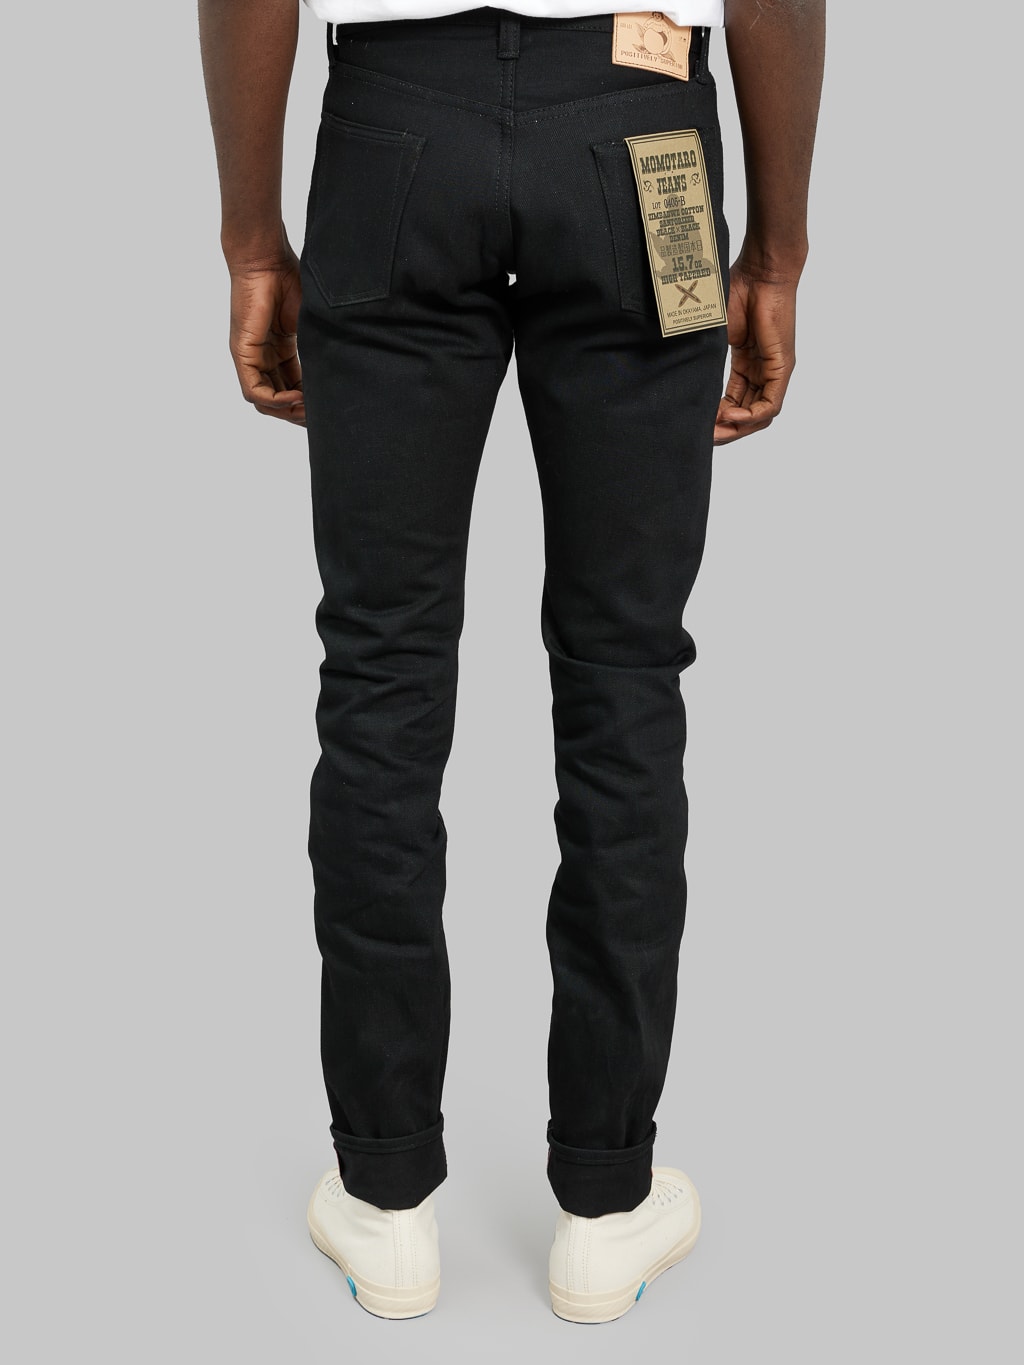 momotaro 0405b selvedge black denim high tapered jeans back fit